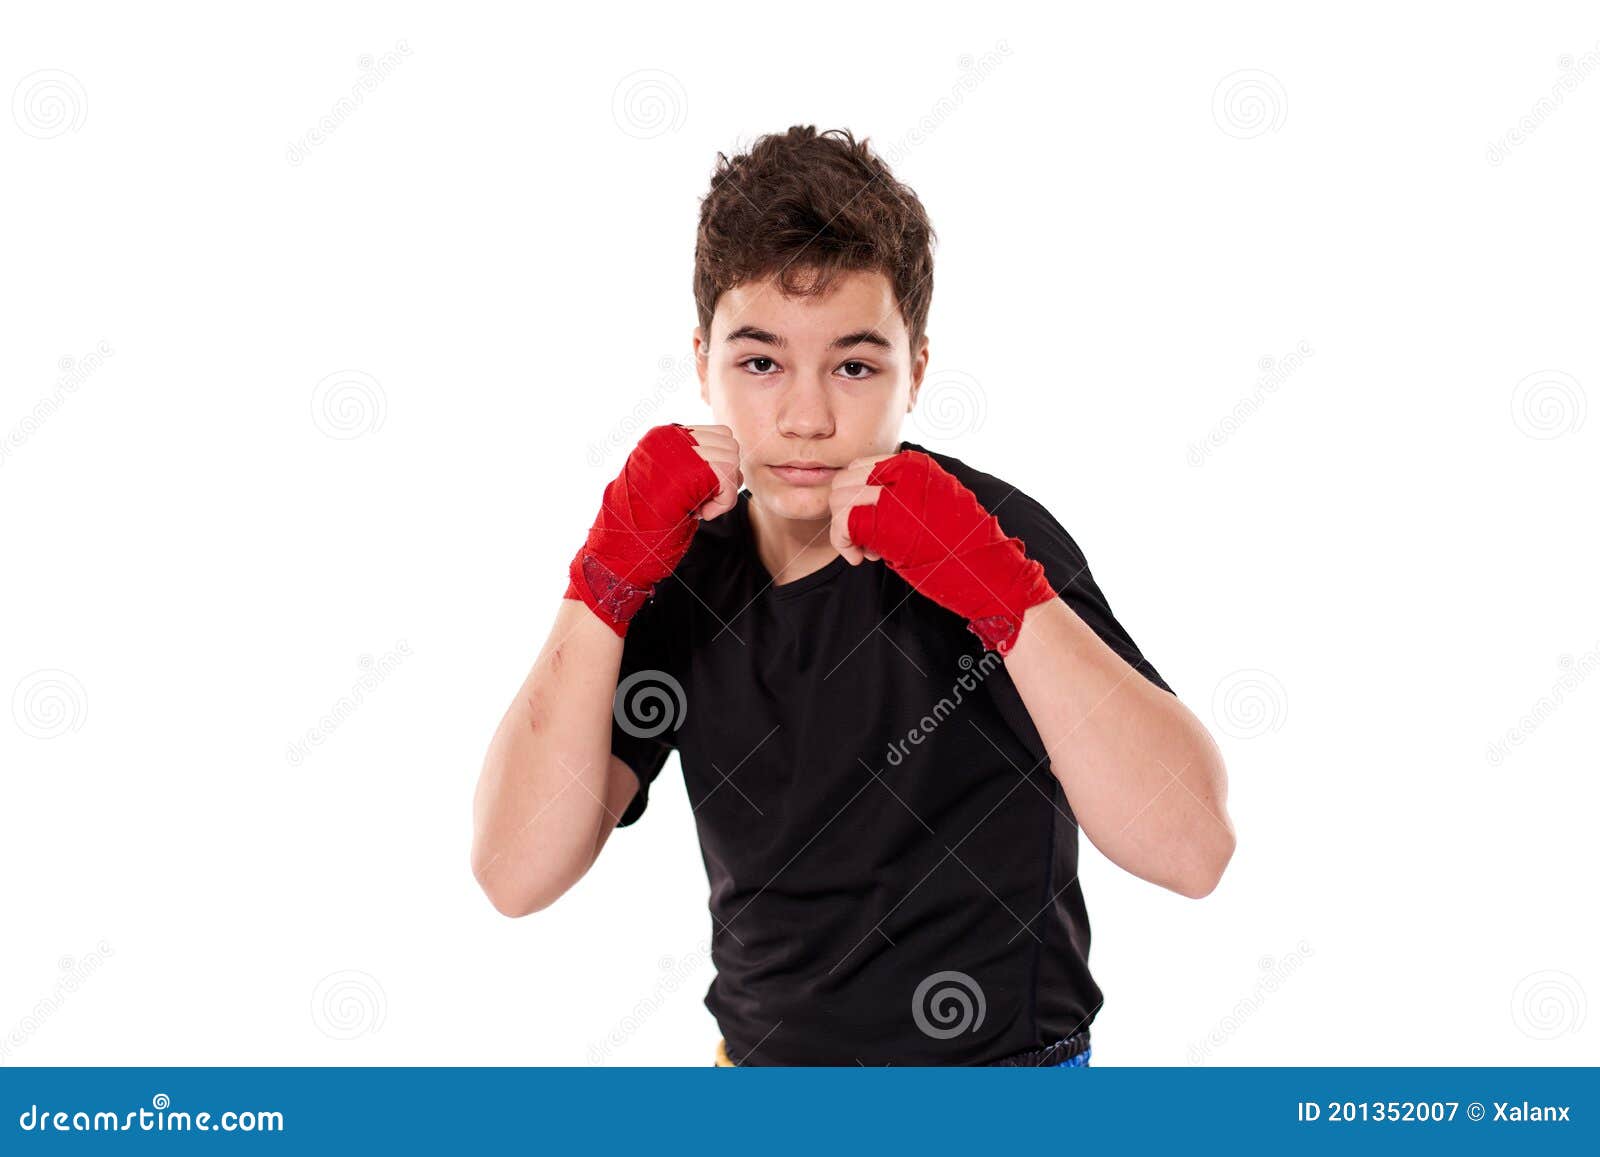 Kickboxer Training Isolated on White Stock Image - Image of healthy ...